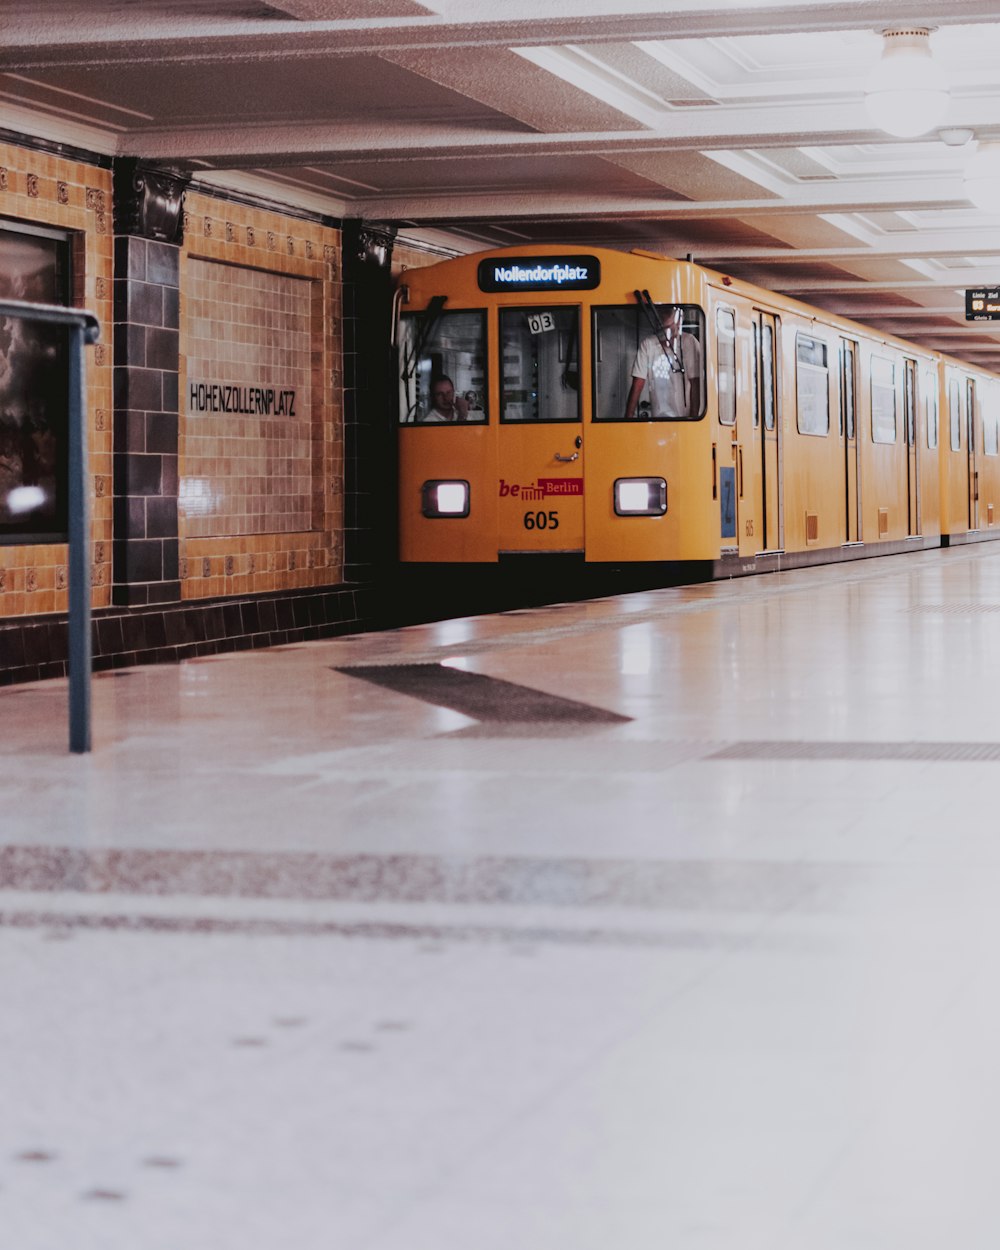 view of yellow orange train inside subway station